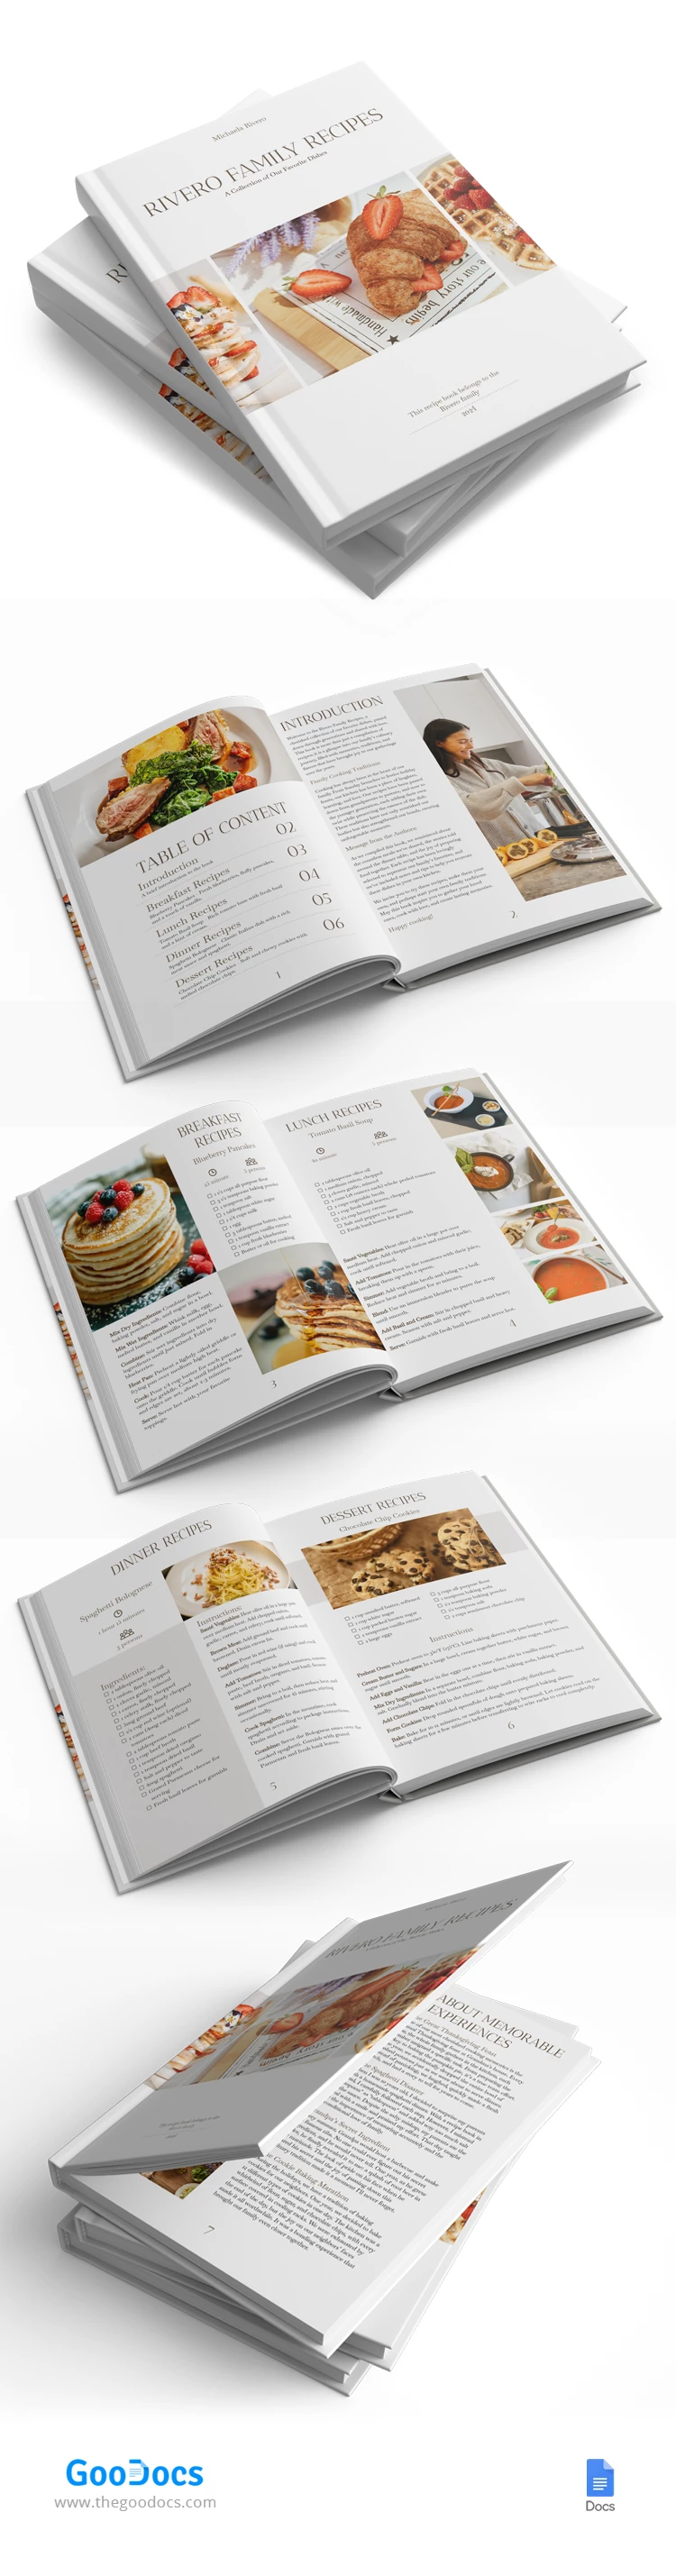 Family Recipe Book - free Google Docs Template - 10068787